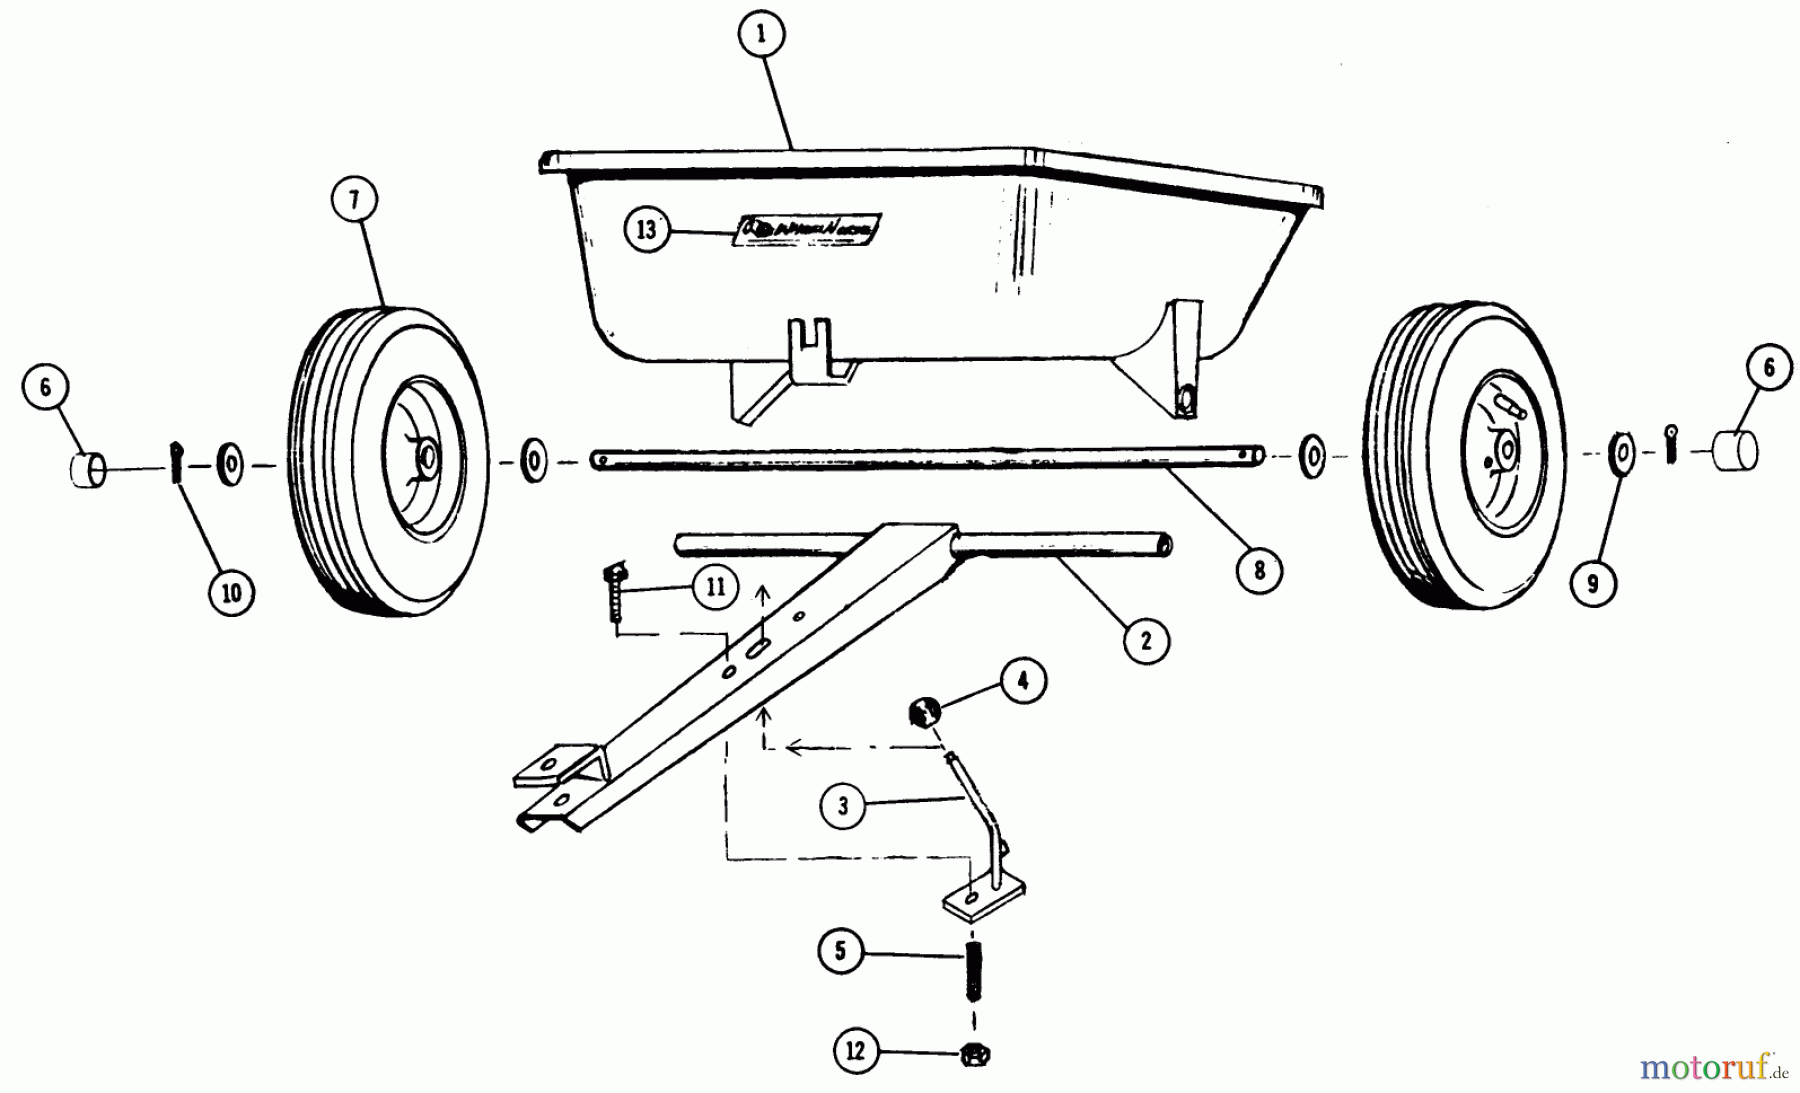  Toro Neu Utility Carts 7-2211 - Toro 2-Wheel Cart, 1968 PARTS LIST-DUMP TRAILER MODEL 7-2211 (FORMERLY LTD-244)